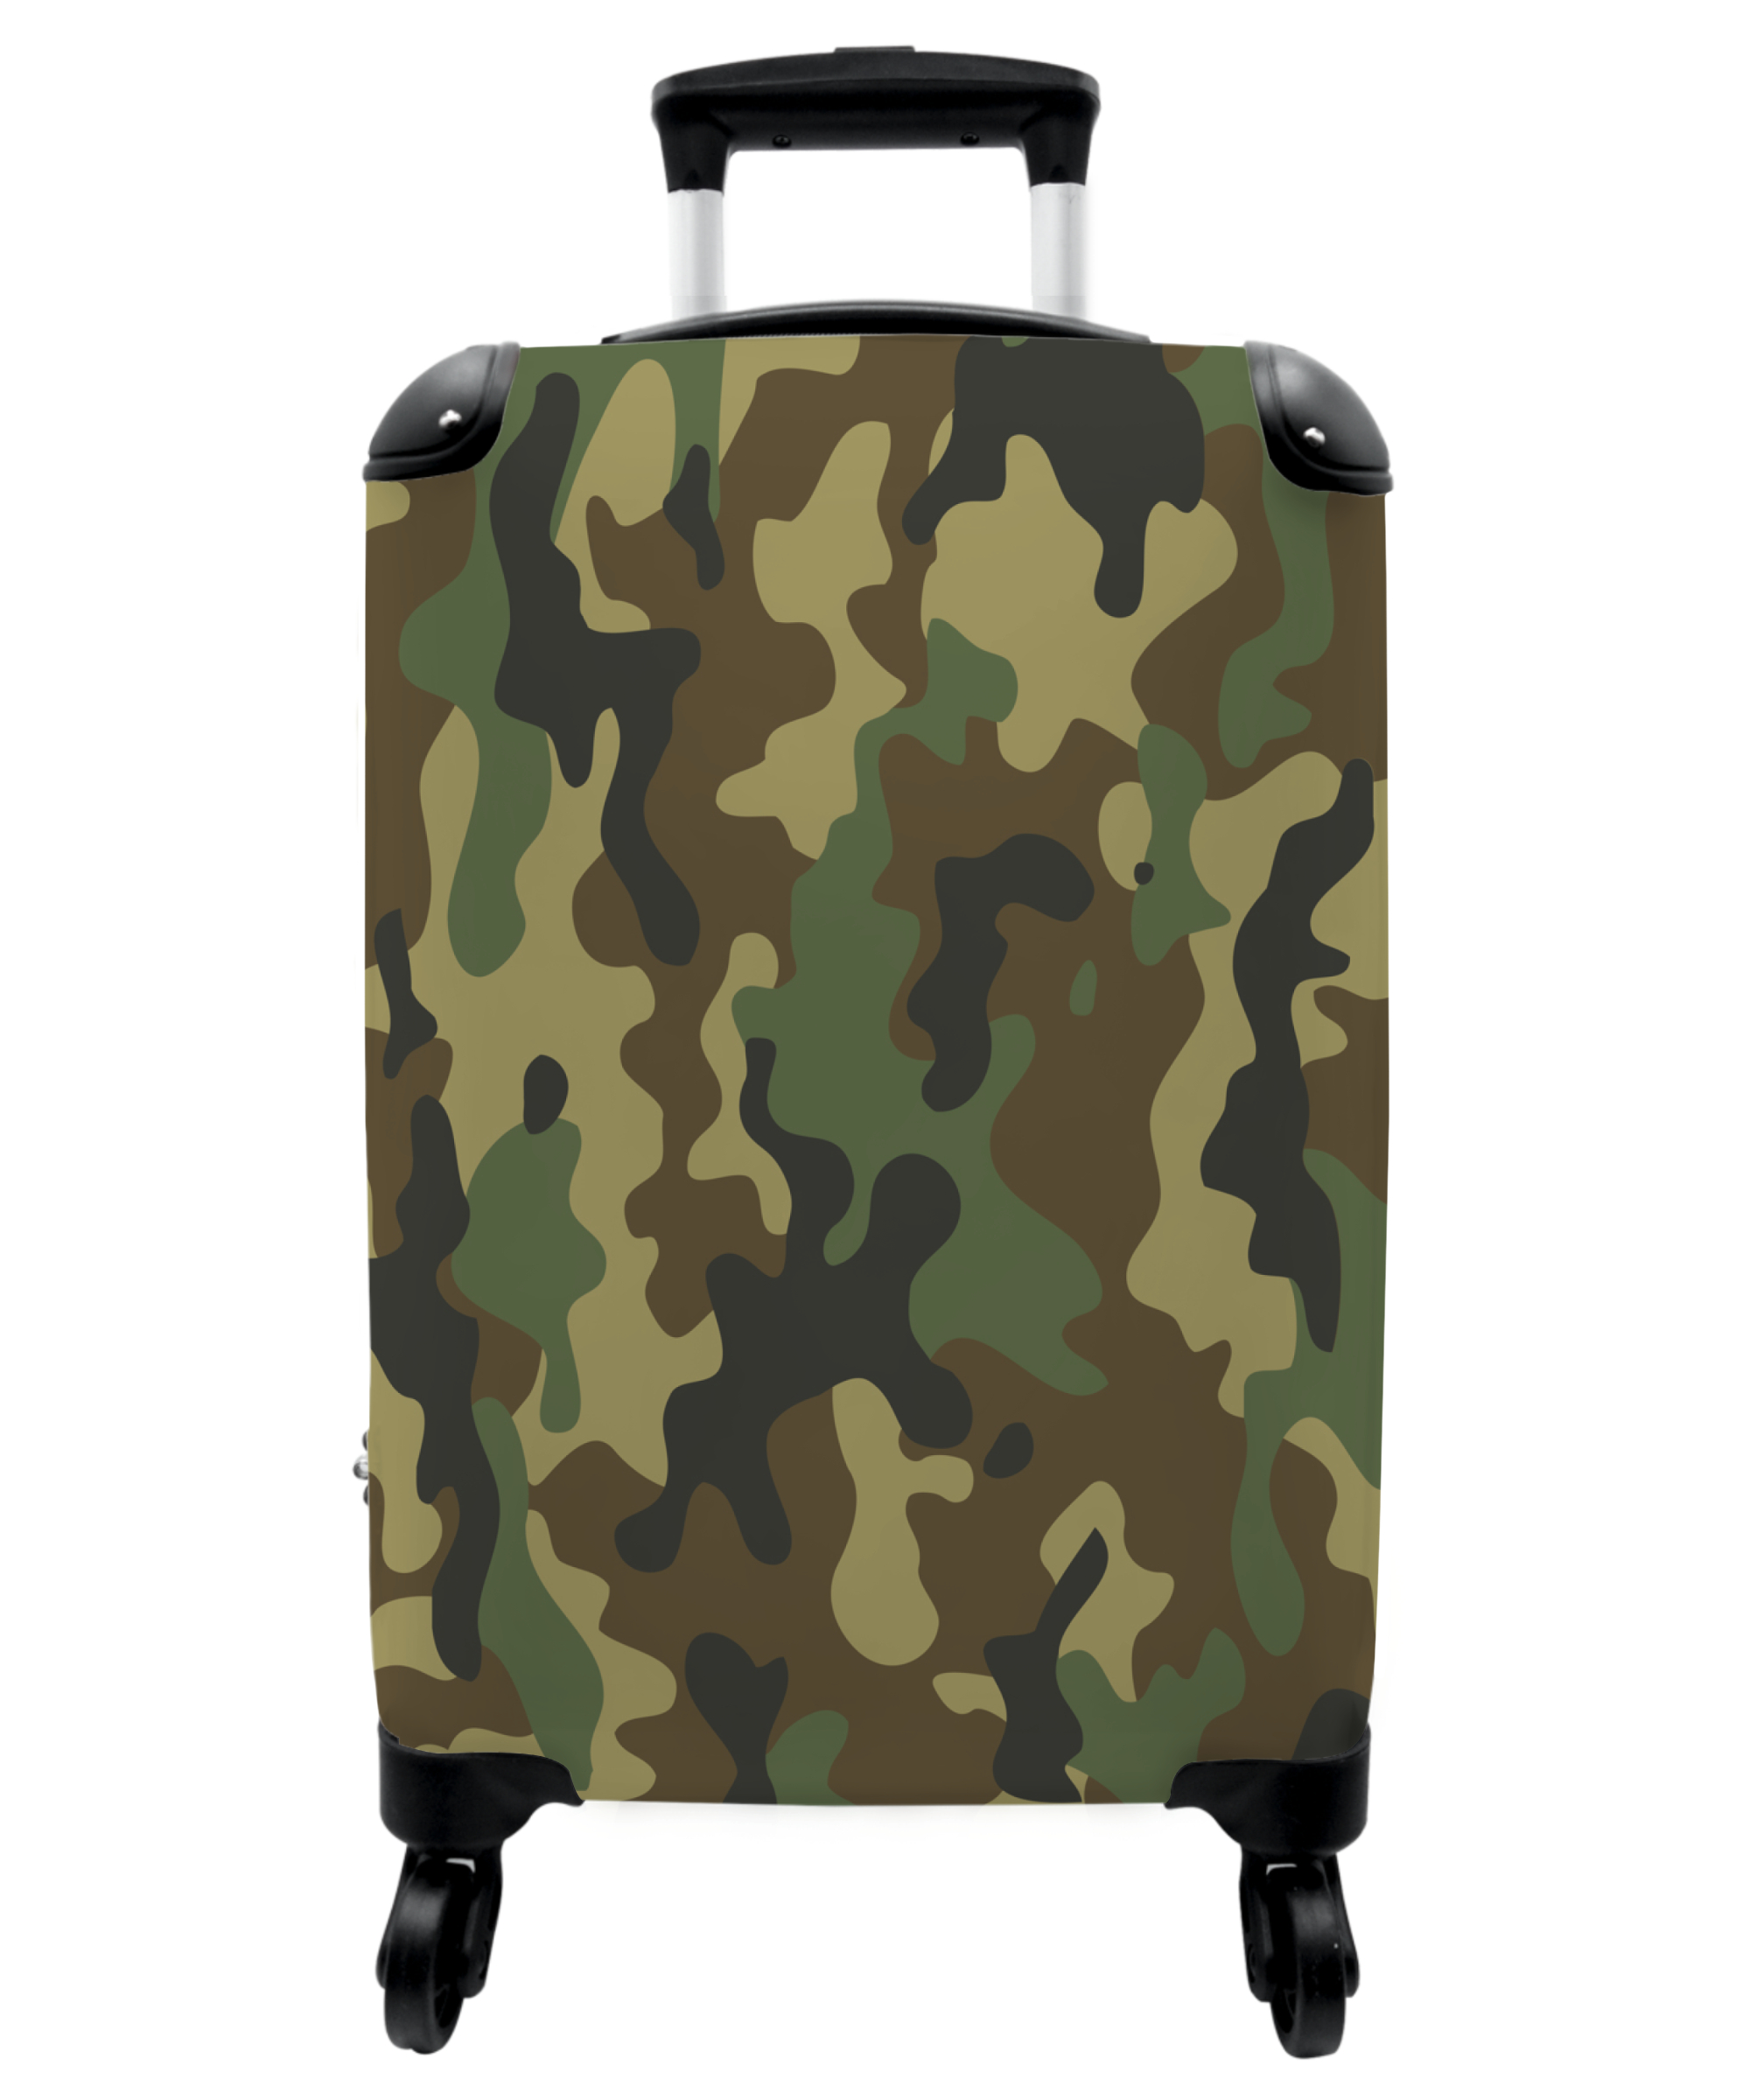 Koffer - Camouflage - Groen - Design - Camo